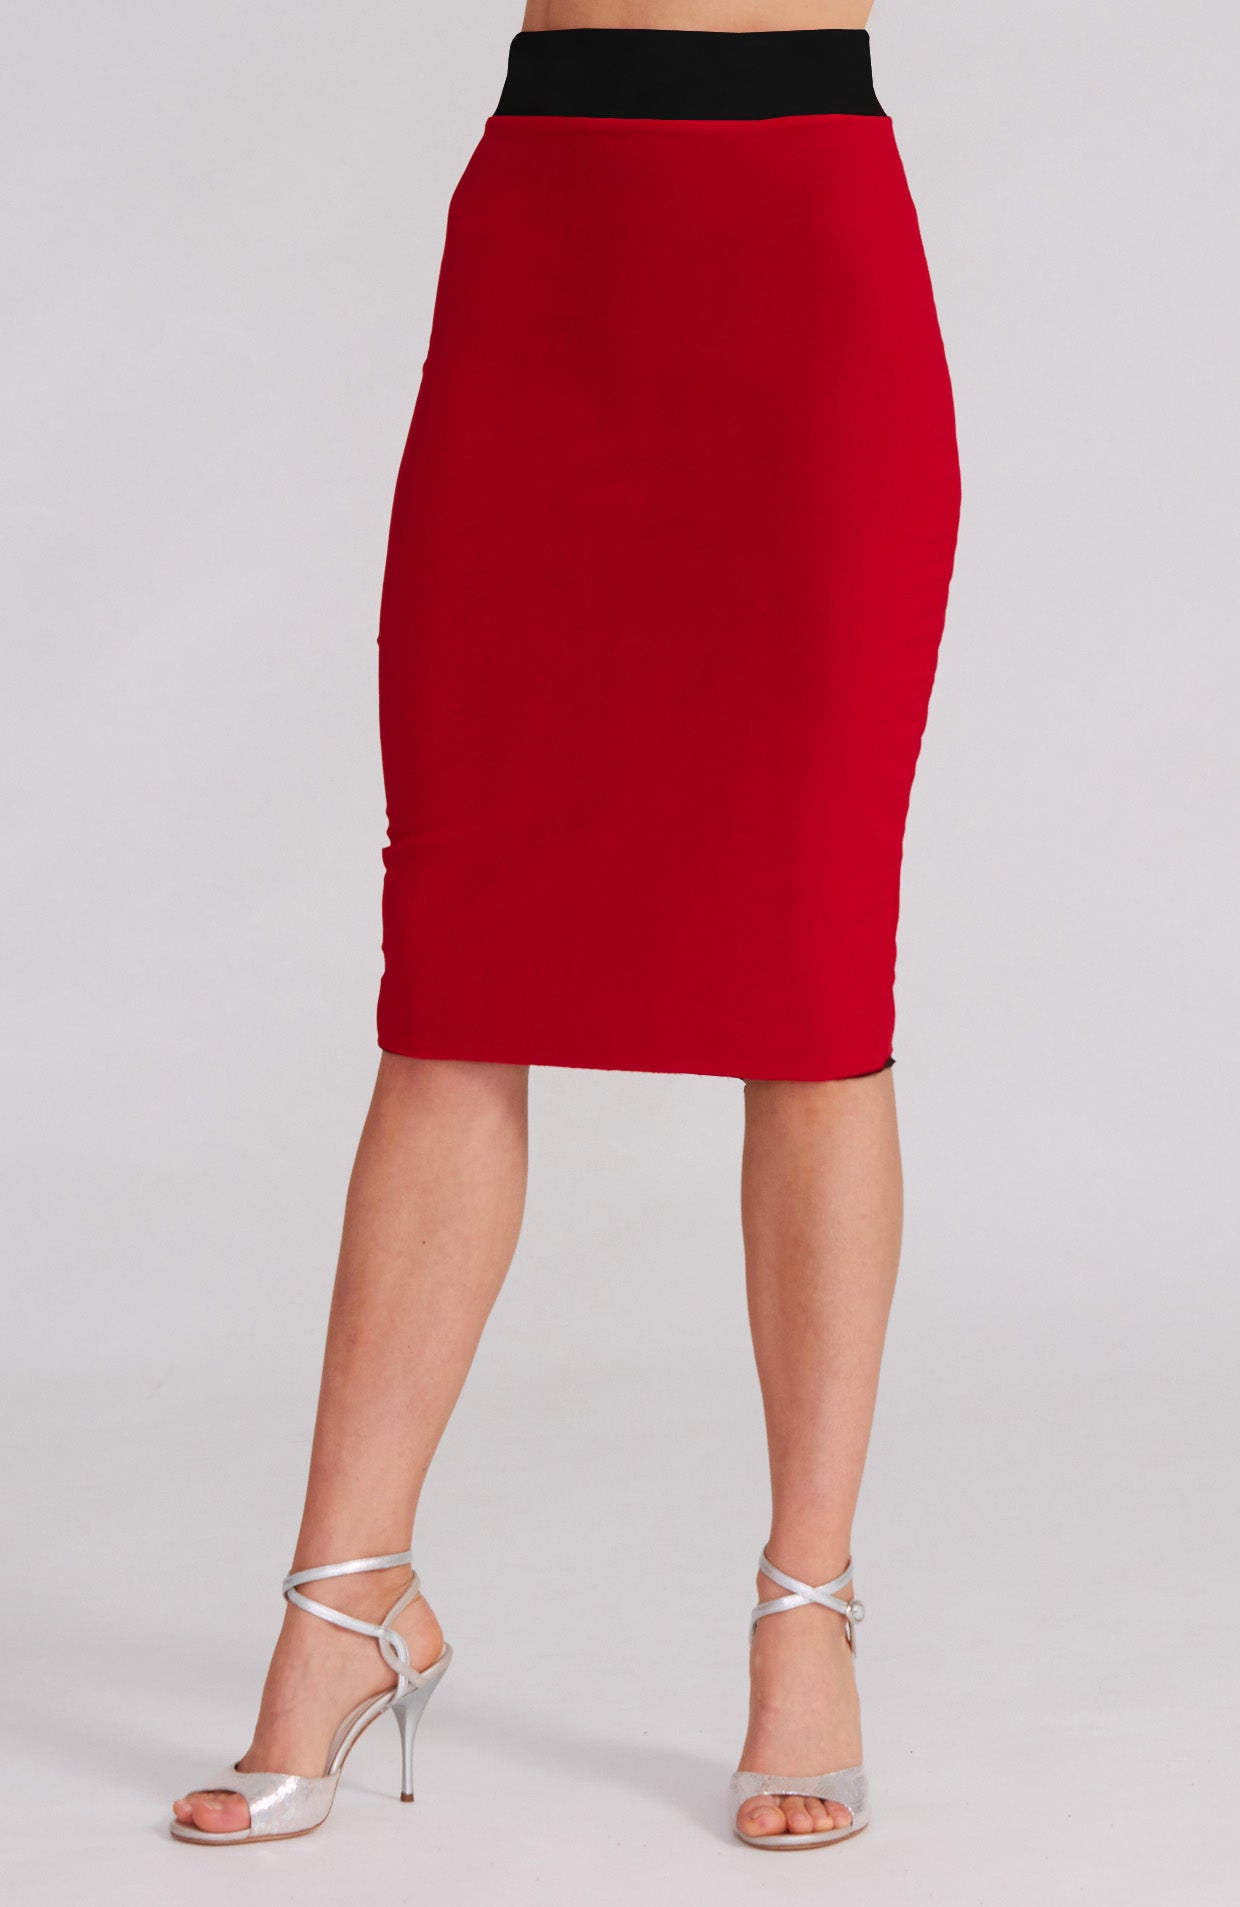 red tango skirt with black waist